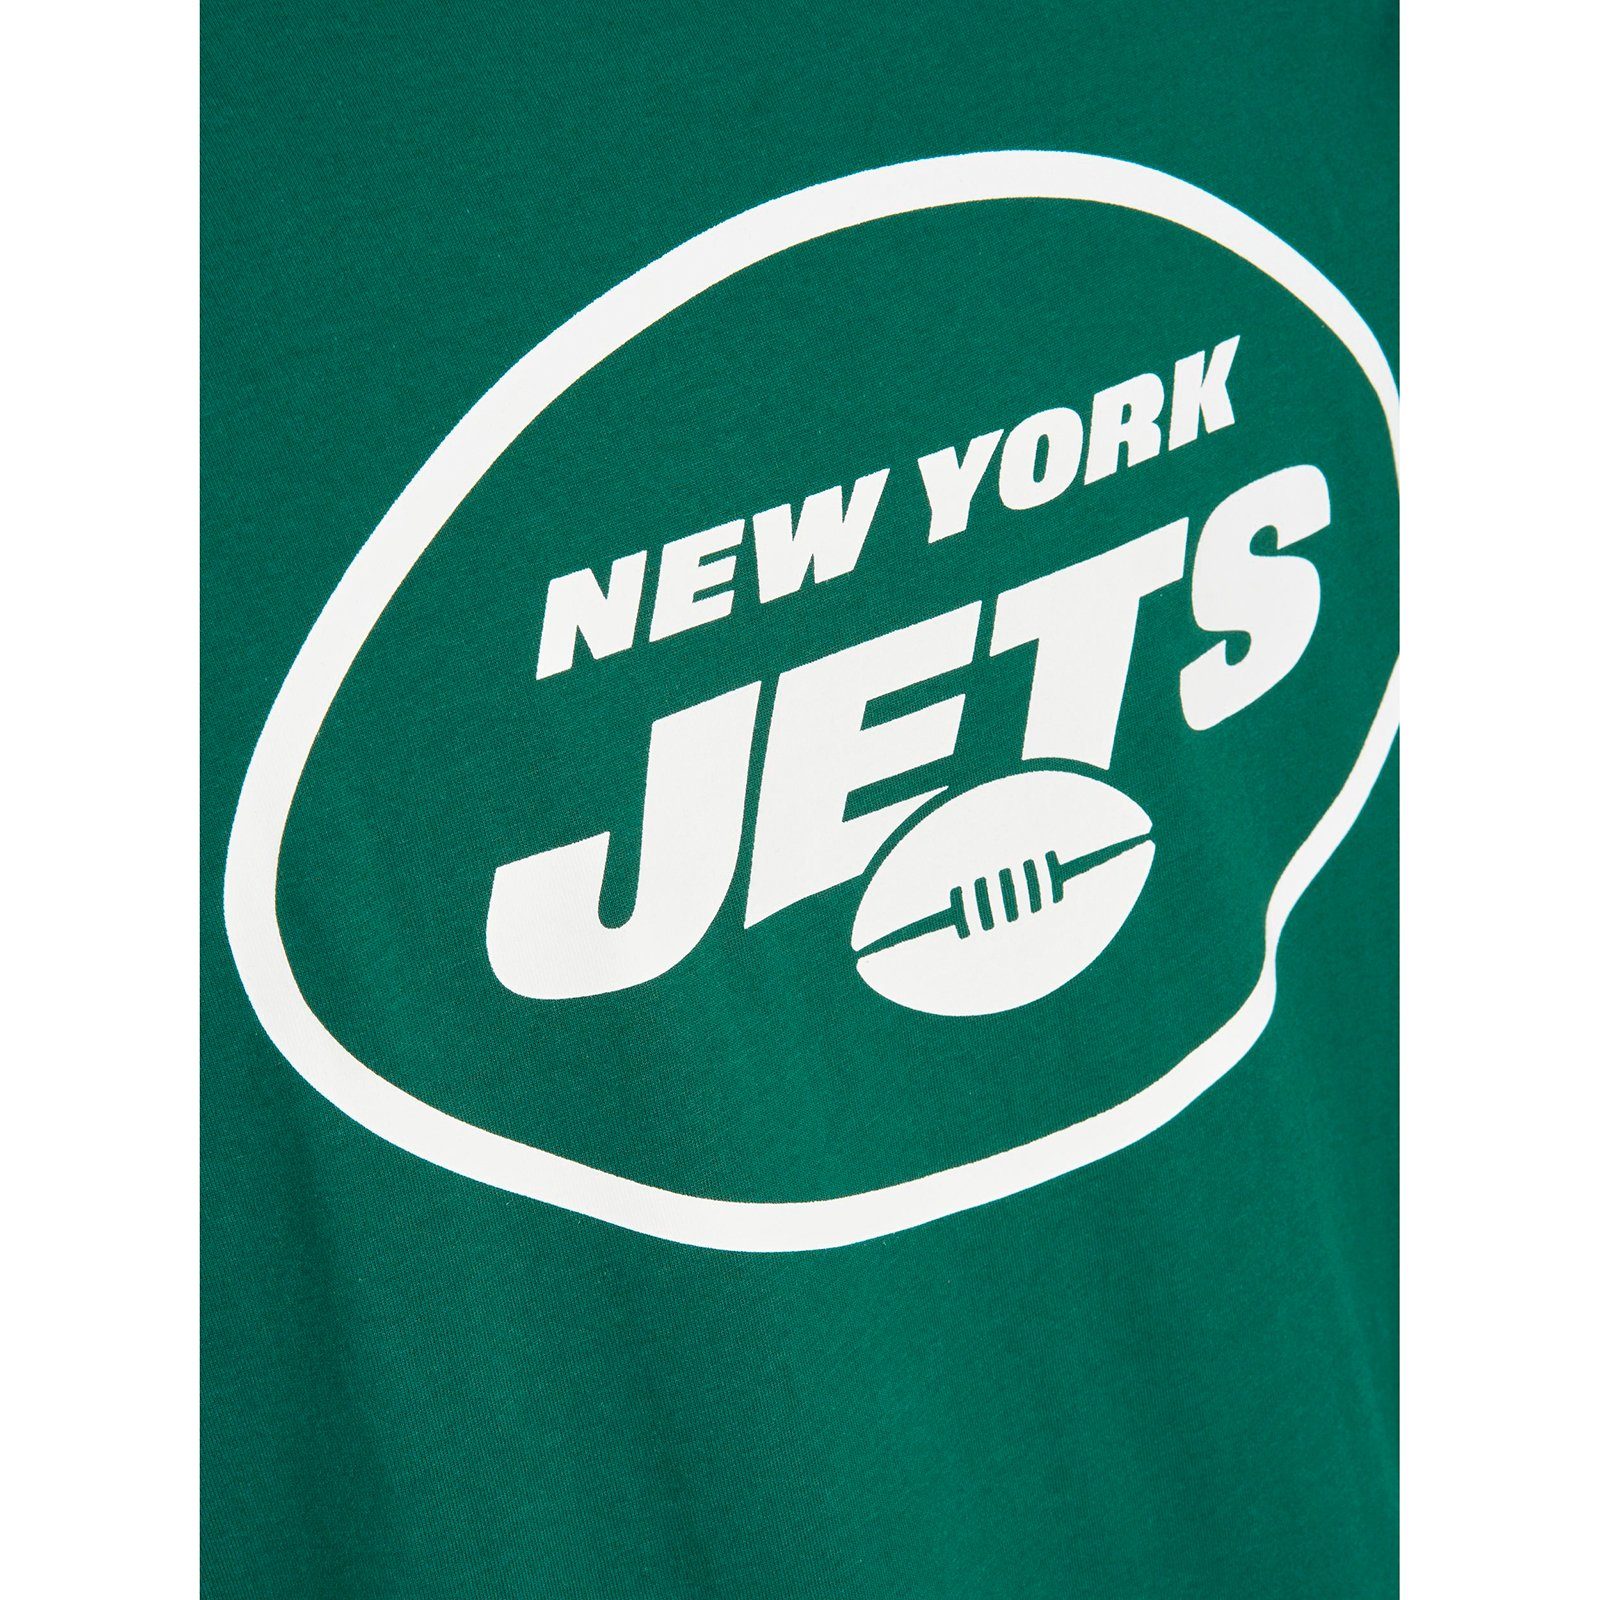 Jets & Rückenprint Jack&Jones Rundhalsshirt New Größen T-Shirt Jack grün York Große Jones